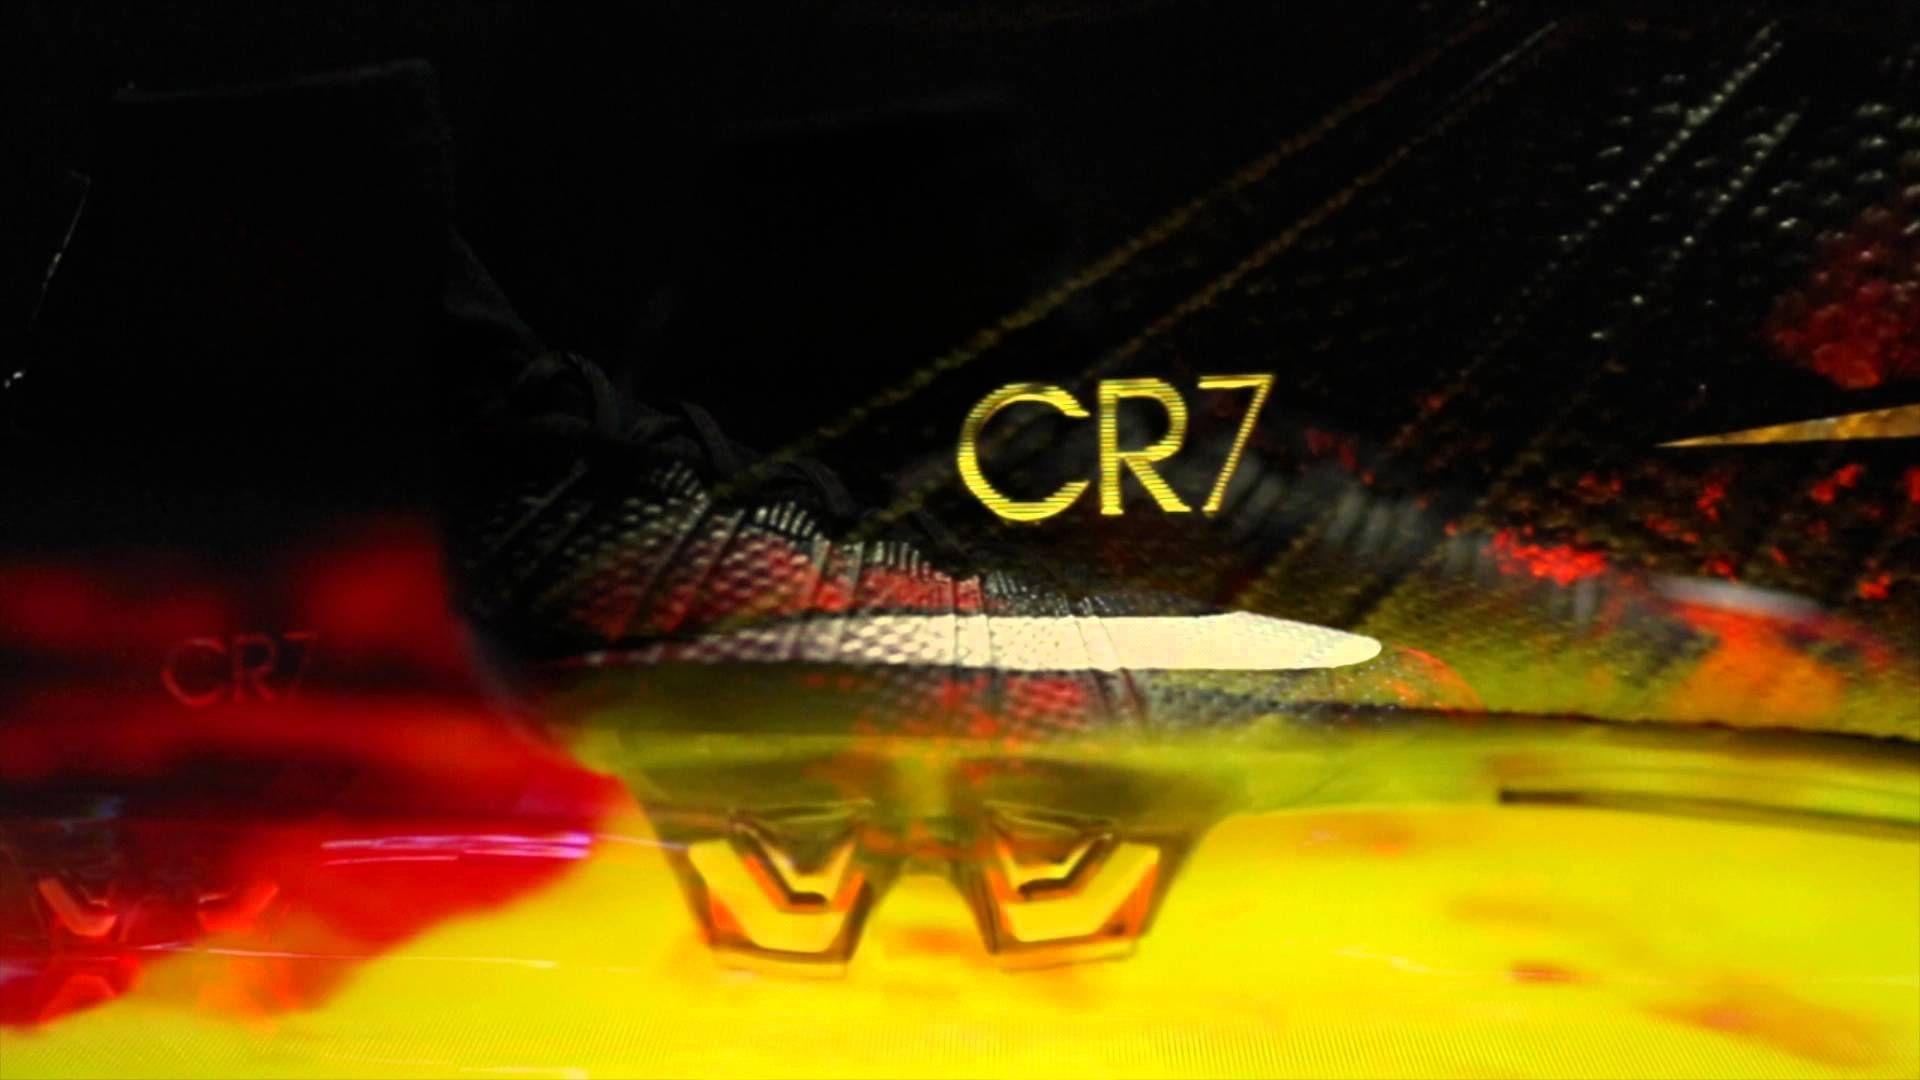 Wecke den Vulkan in dir! Der neue CR7. #nike #cr7 #outfitter